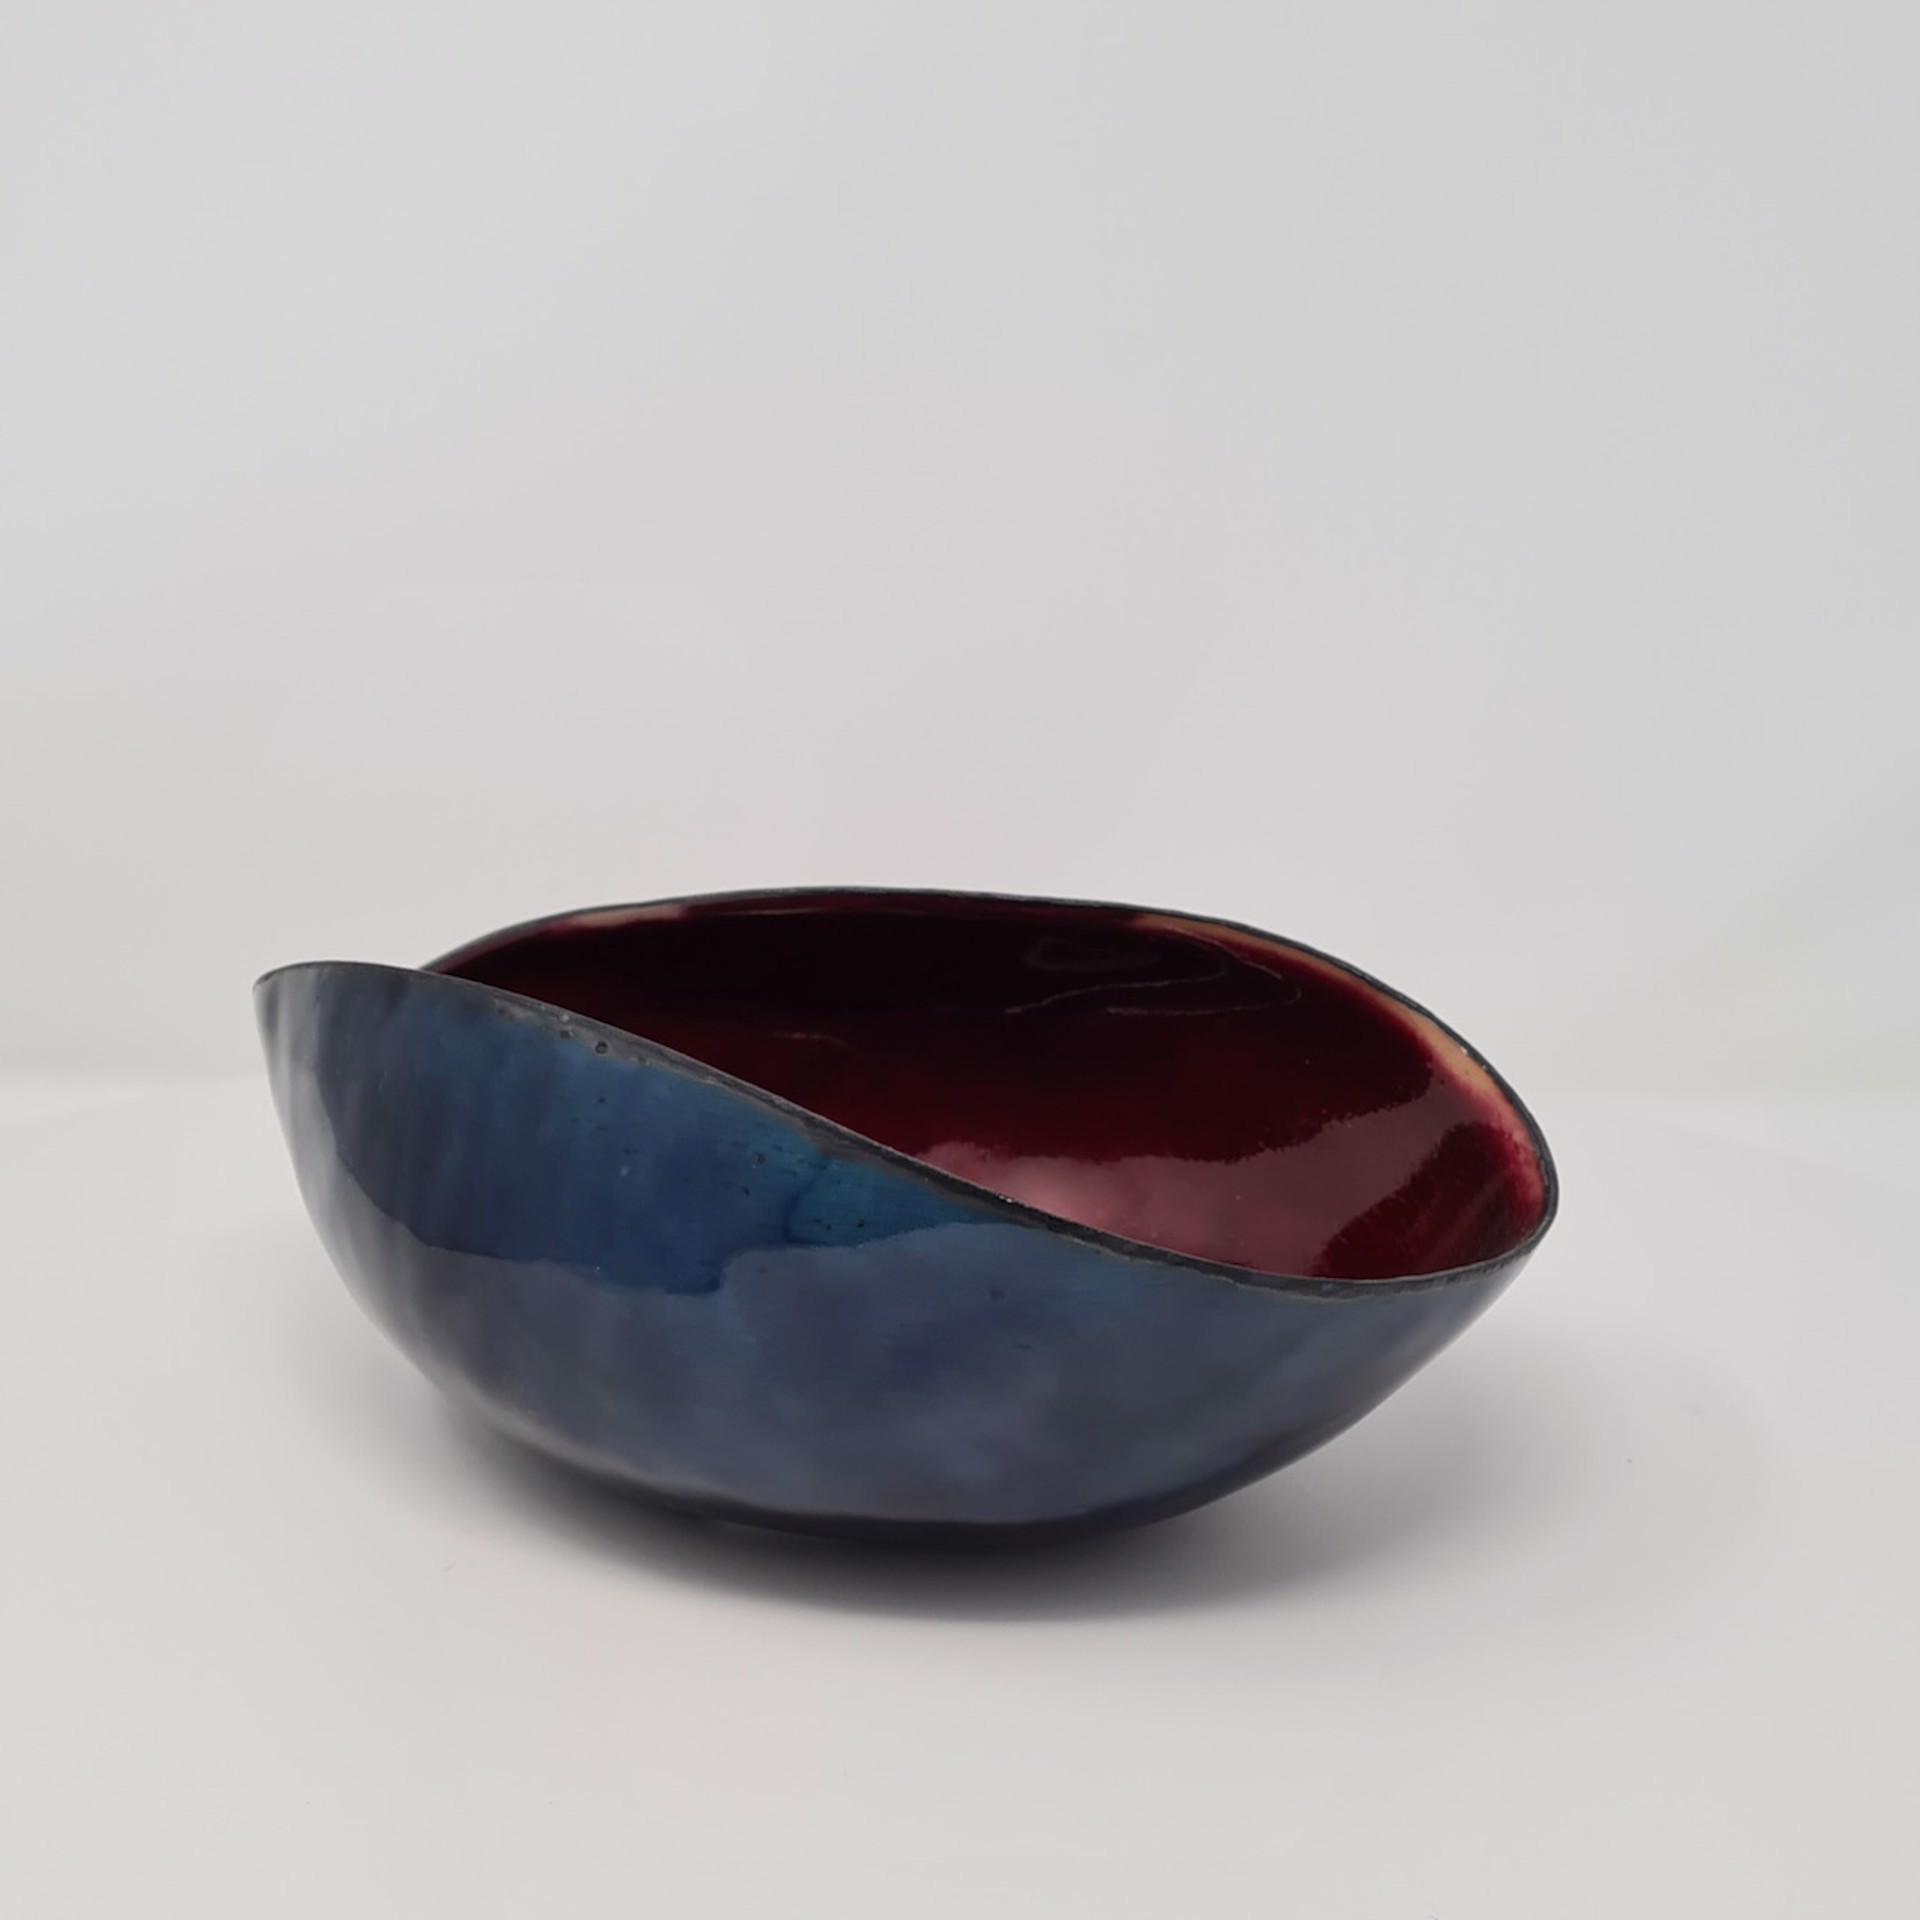 Enamel Copper Altered Bowl by Lundsten Glazzard